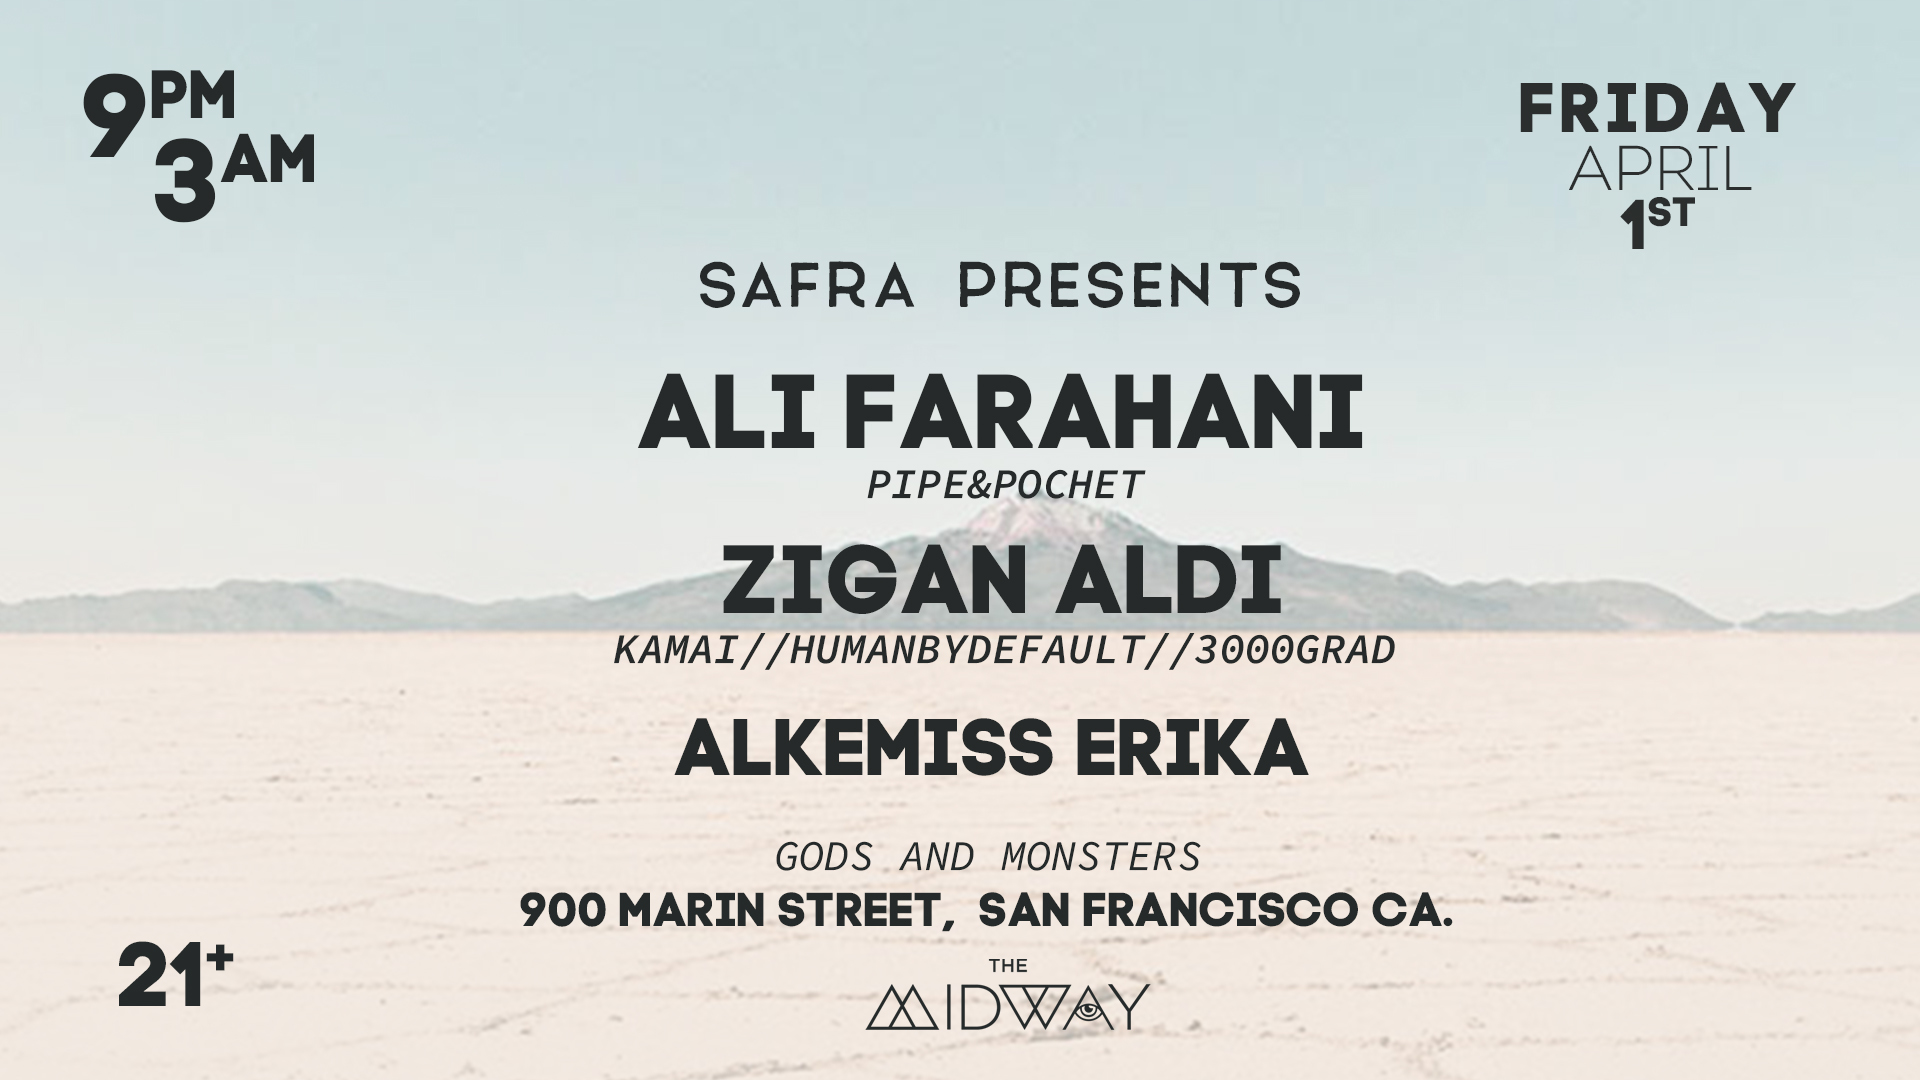 Safra presents: Ali Frahani & Zigan Aldi at the Midway, San Francisco, California, United States